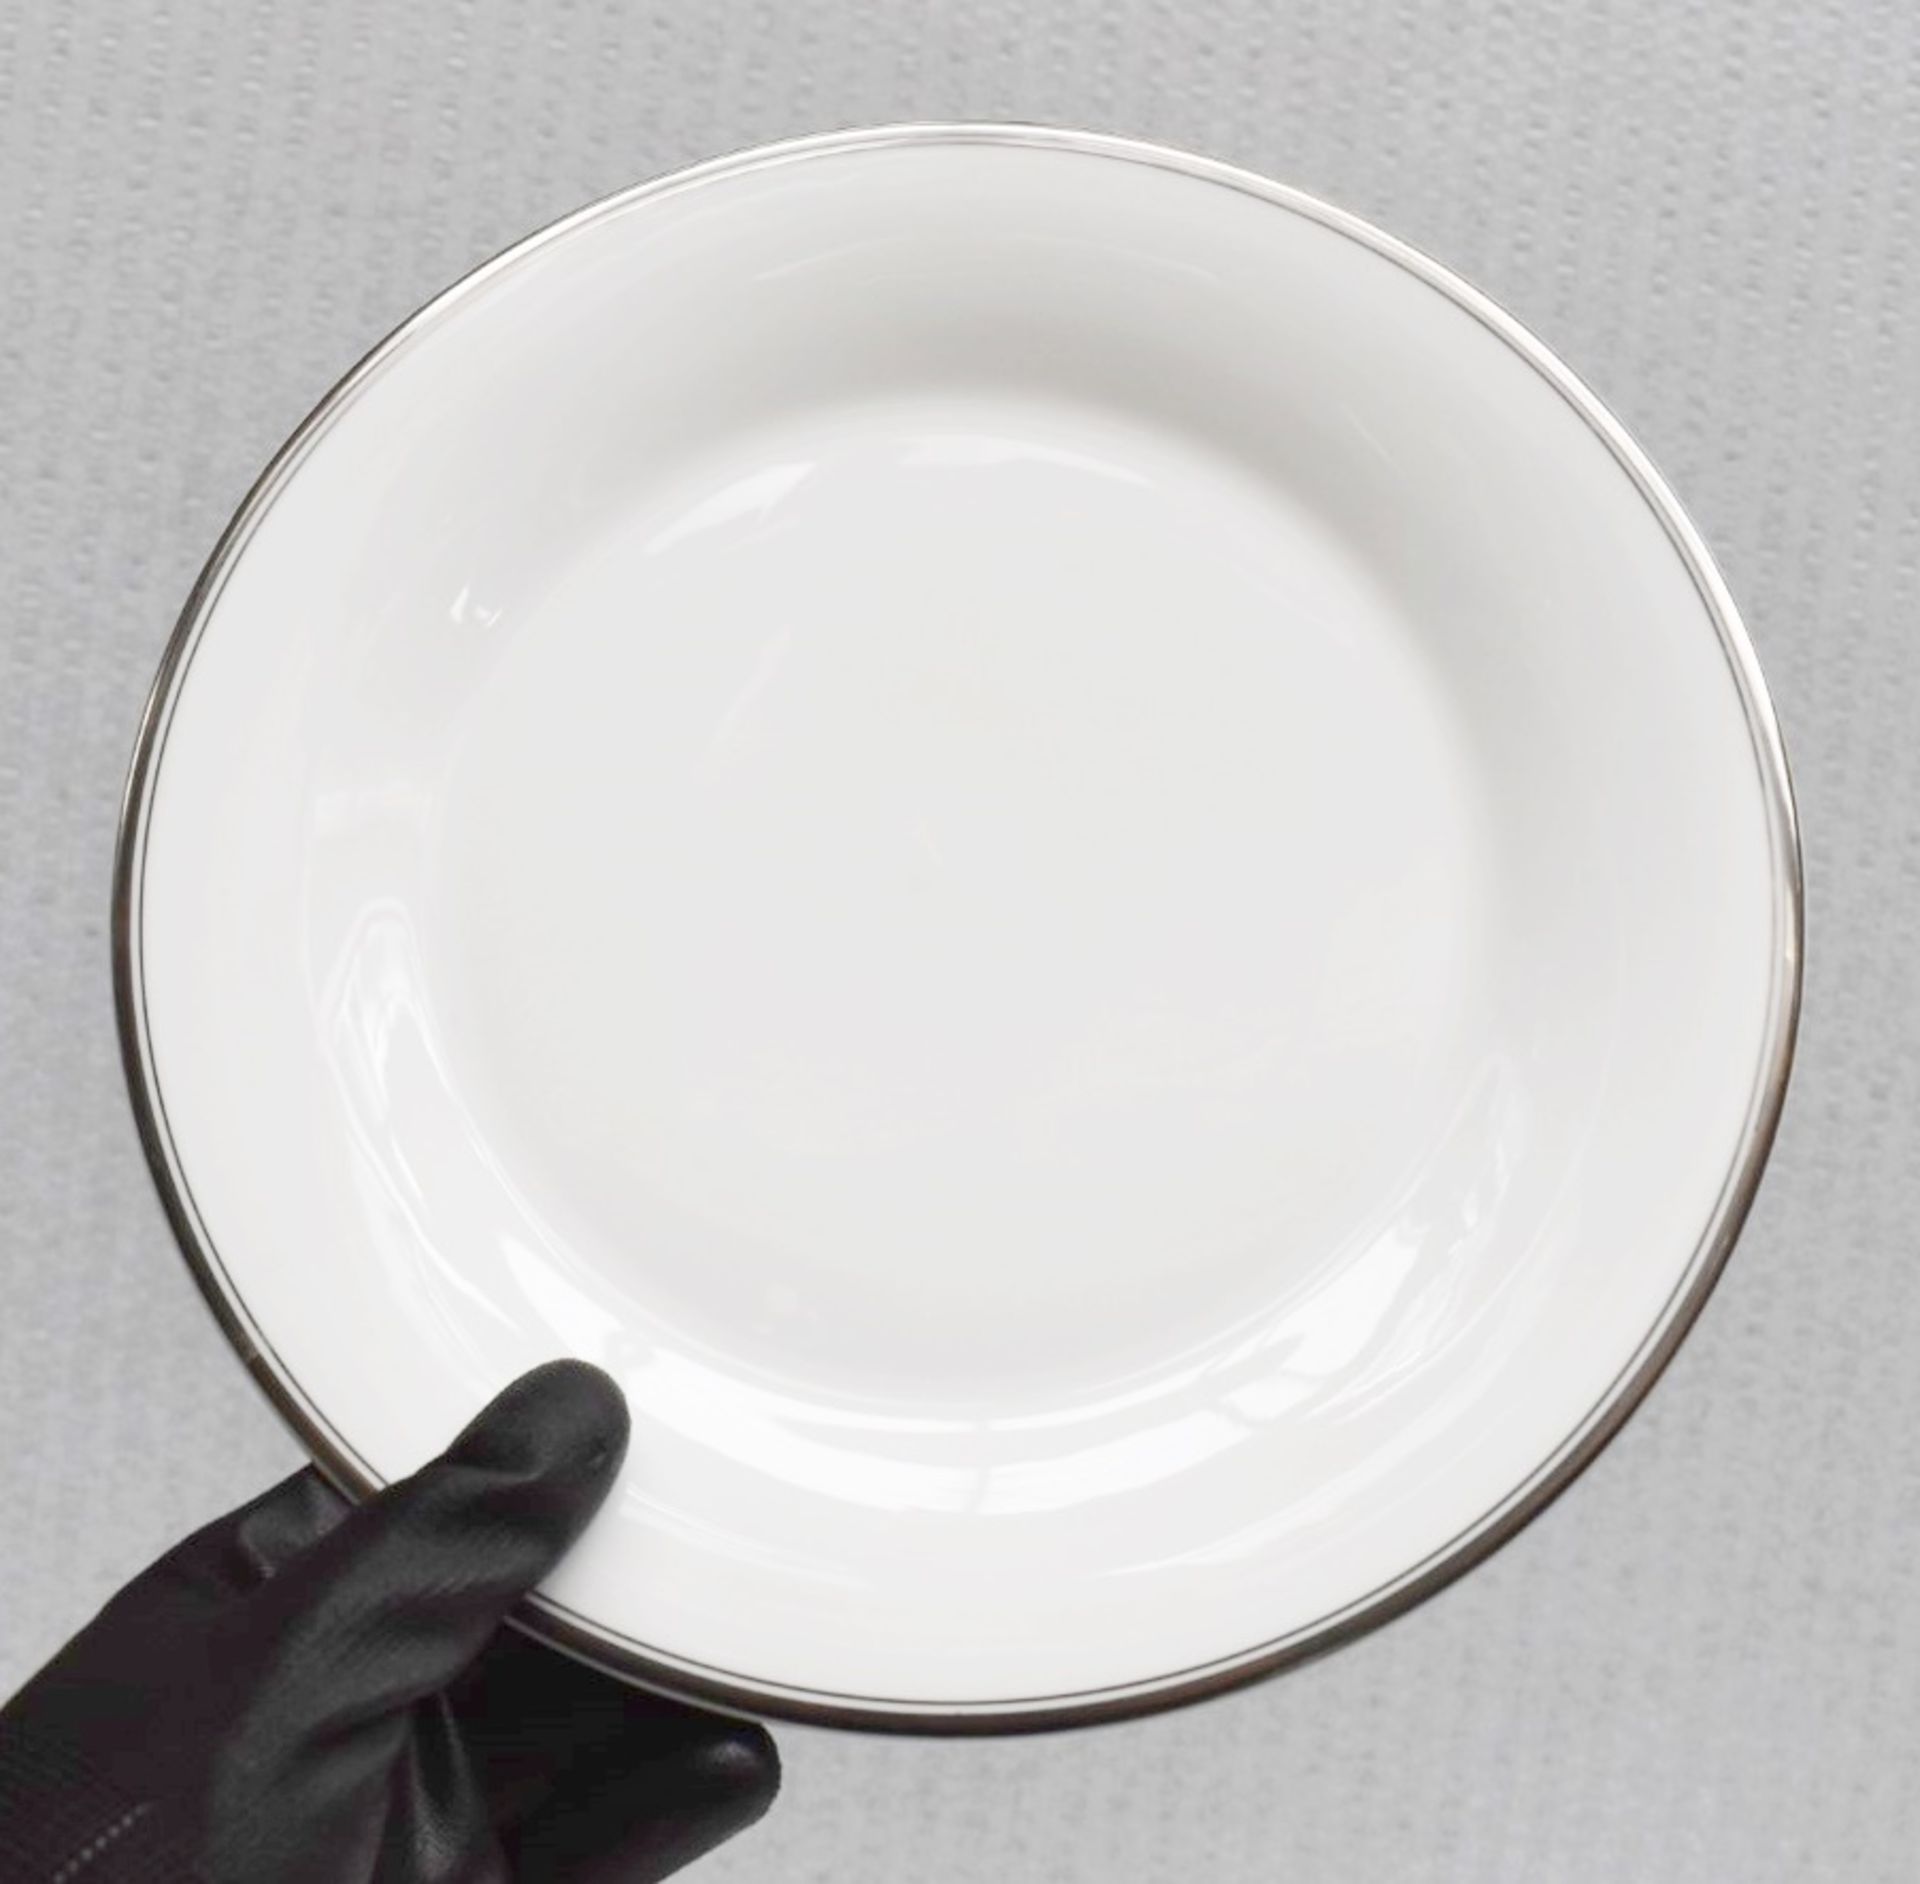 7 x Royal Doulton Platinum Concord ø27cm Dinner Plates - Original RRP £189.00 - Ref: CNT769/WH2/ - Image 2 of 3